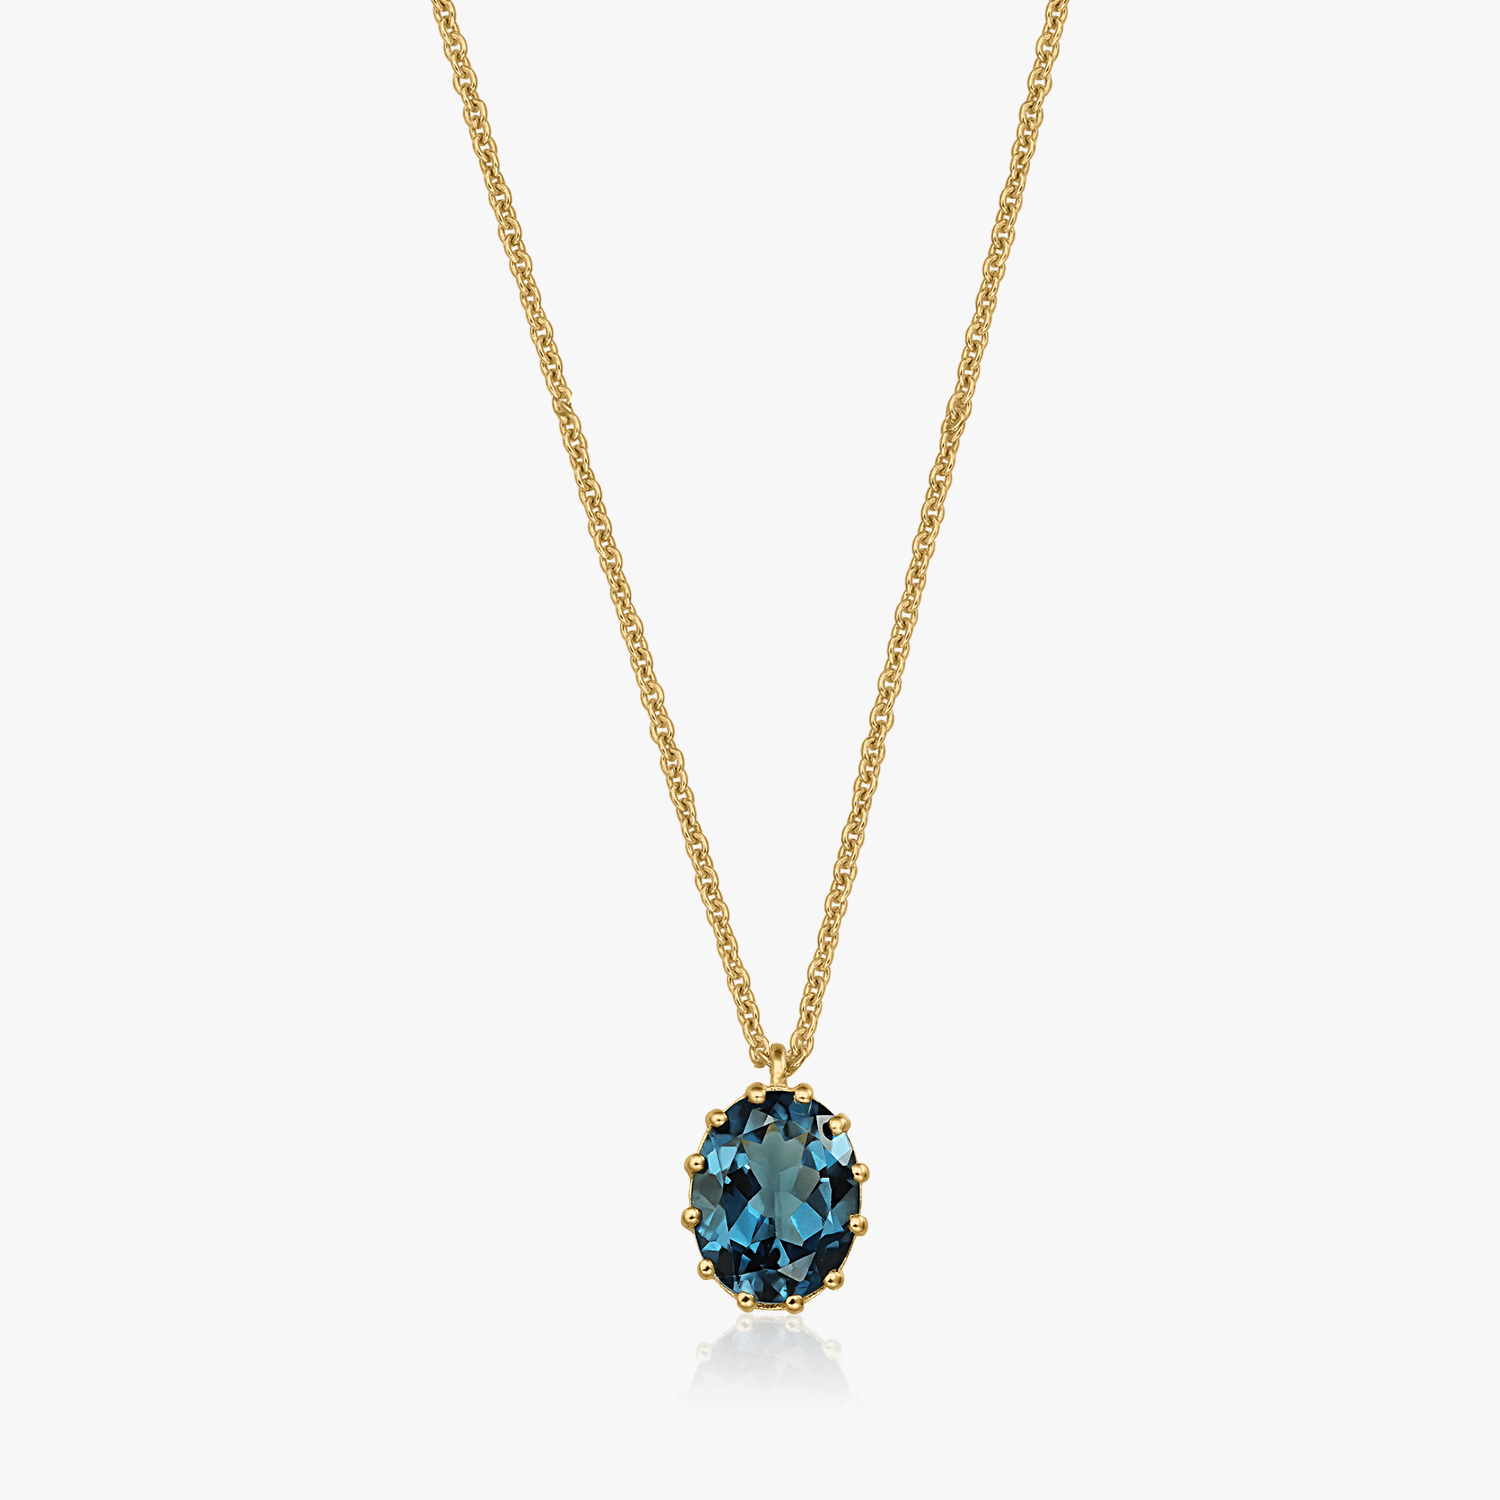 Golden Serene silver necklace - Topaz Blue London 